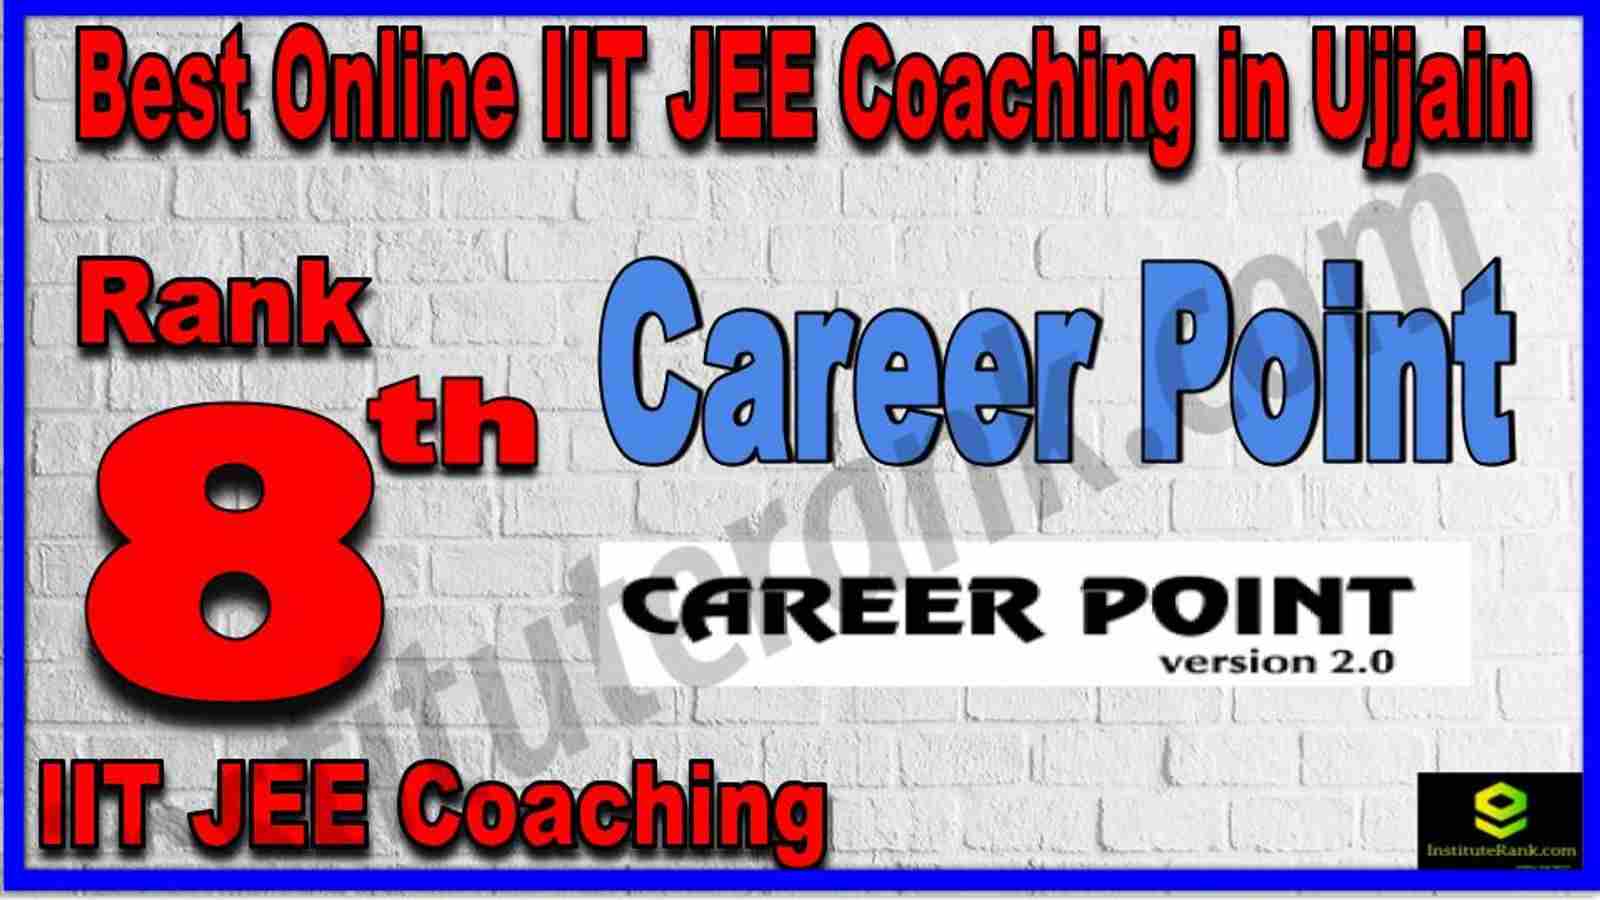 Rank 8th Best Online IIT-JEE Coaching in Ujjain